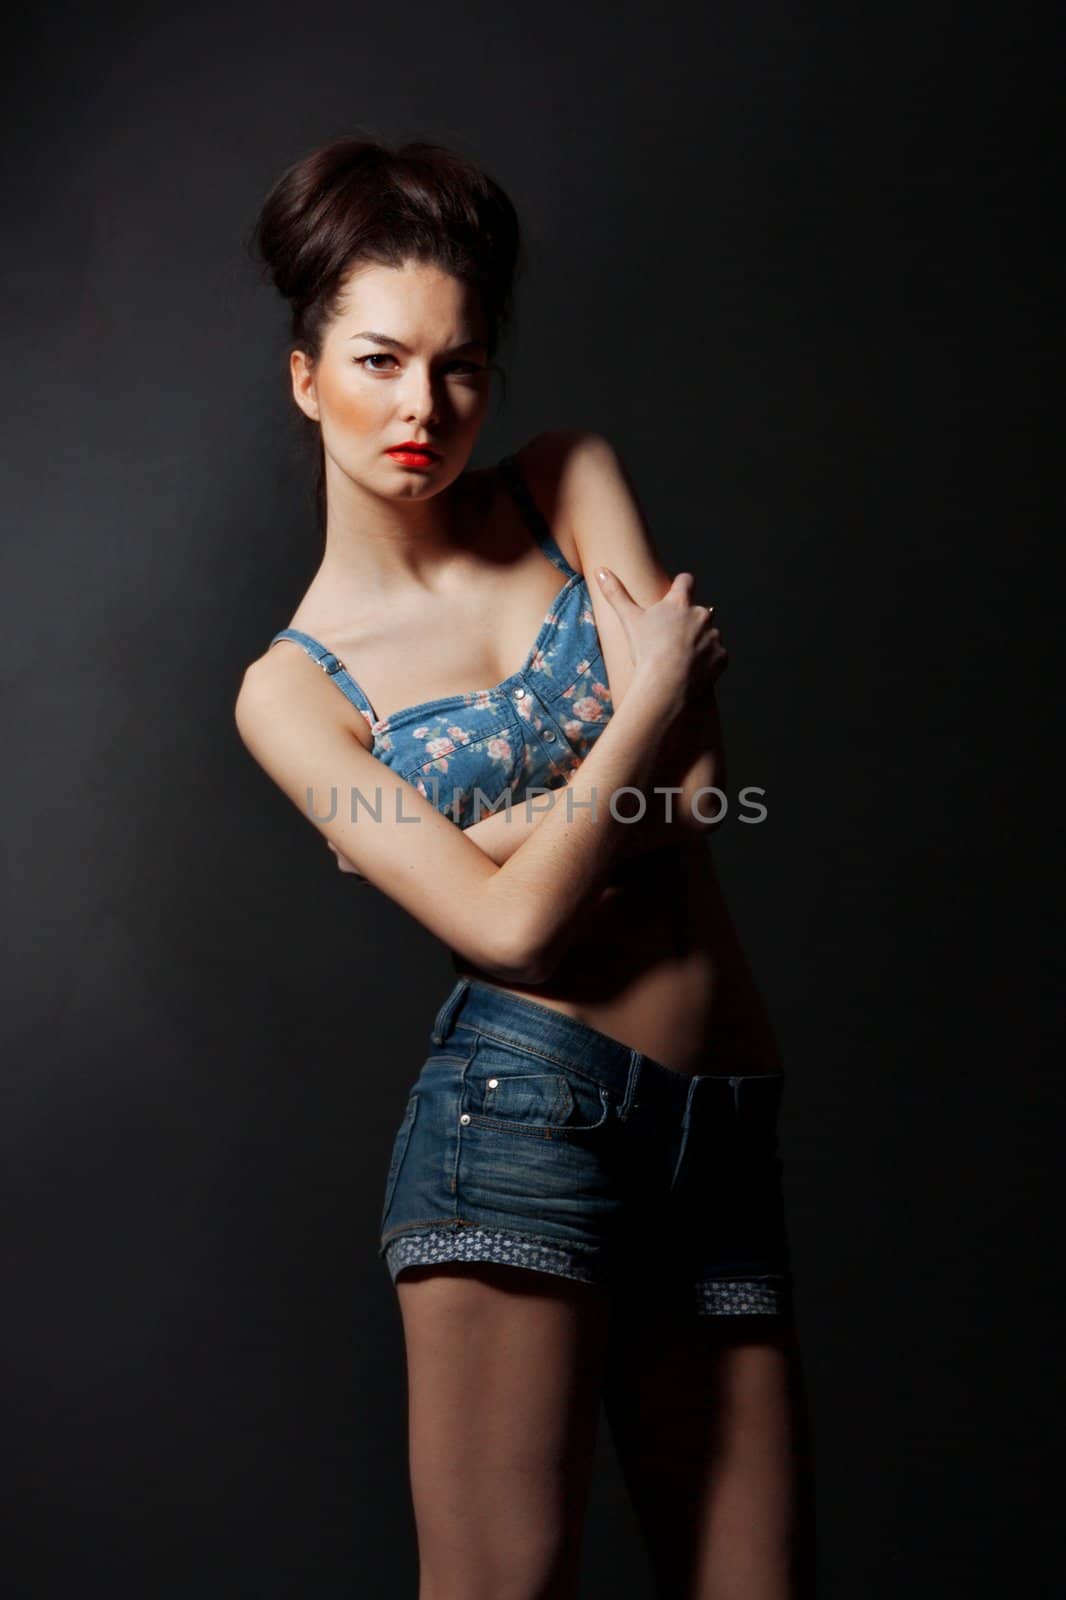 Fashion portrait of sensual young woman by nigerfoxy